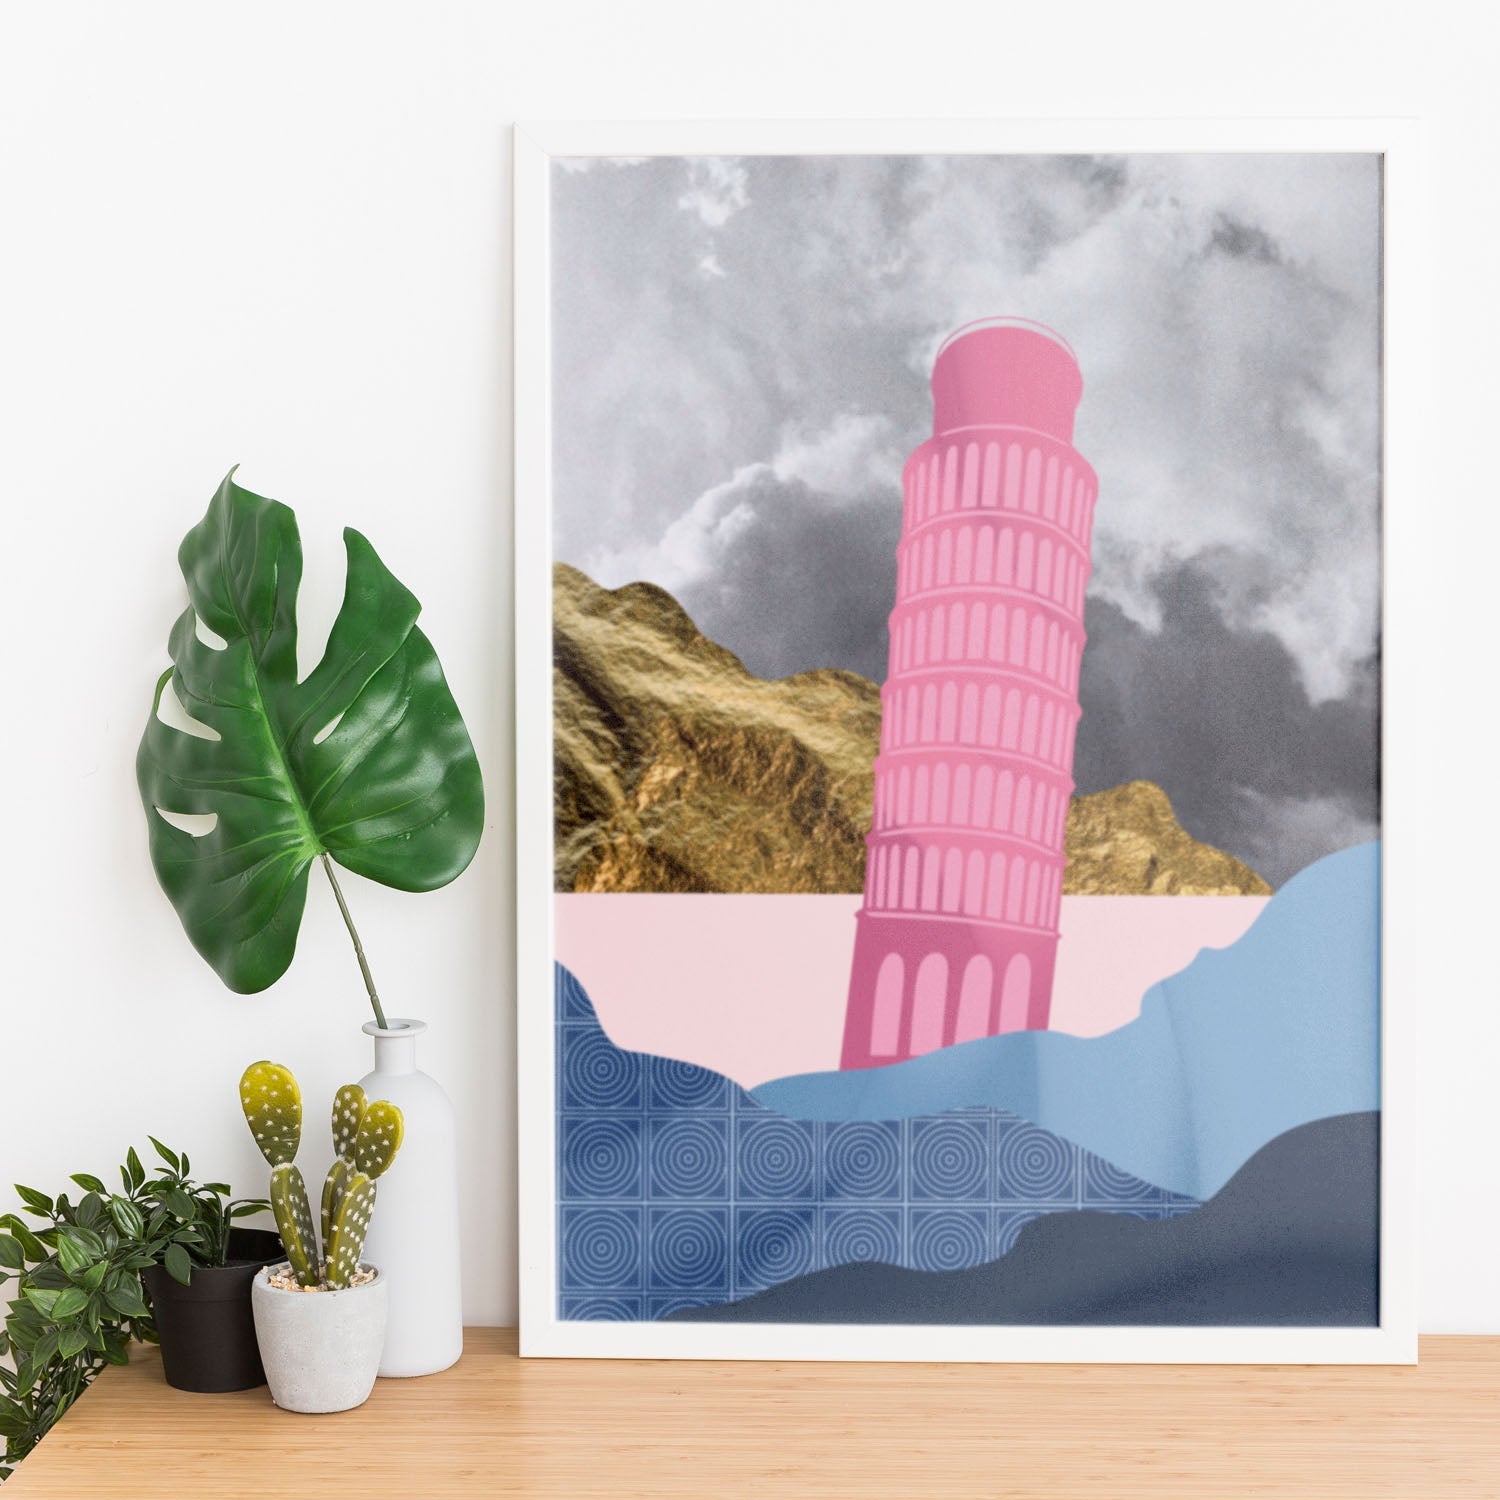 Leaning Tower of Pisa-Artwork-Nacnic-Nacnic Estudio SL